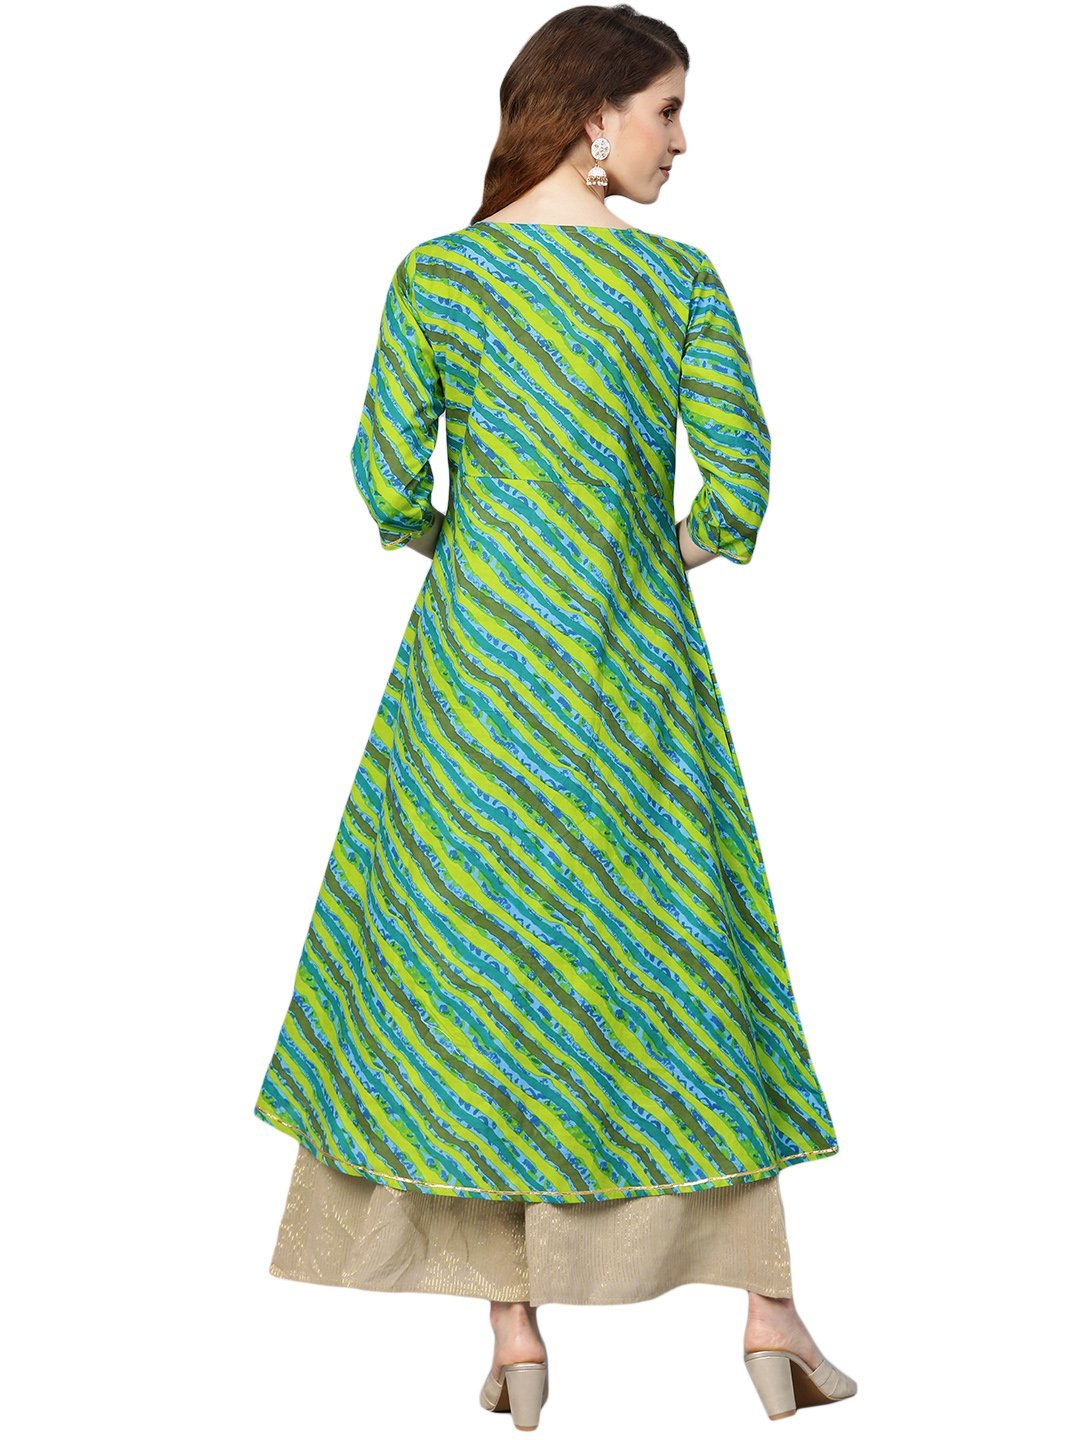 Women's Green Printed 3/4 Sleeve Cotton Round Neck Casual Kurta Only - Myshka